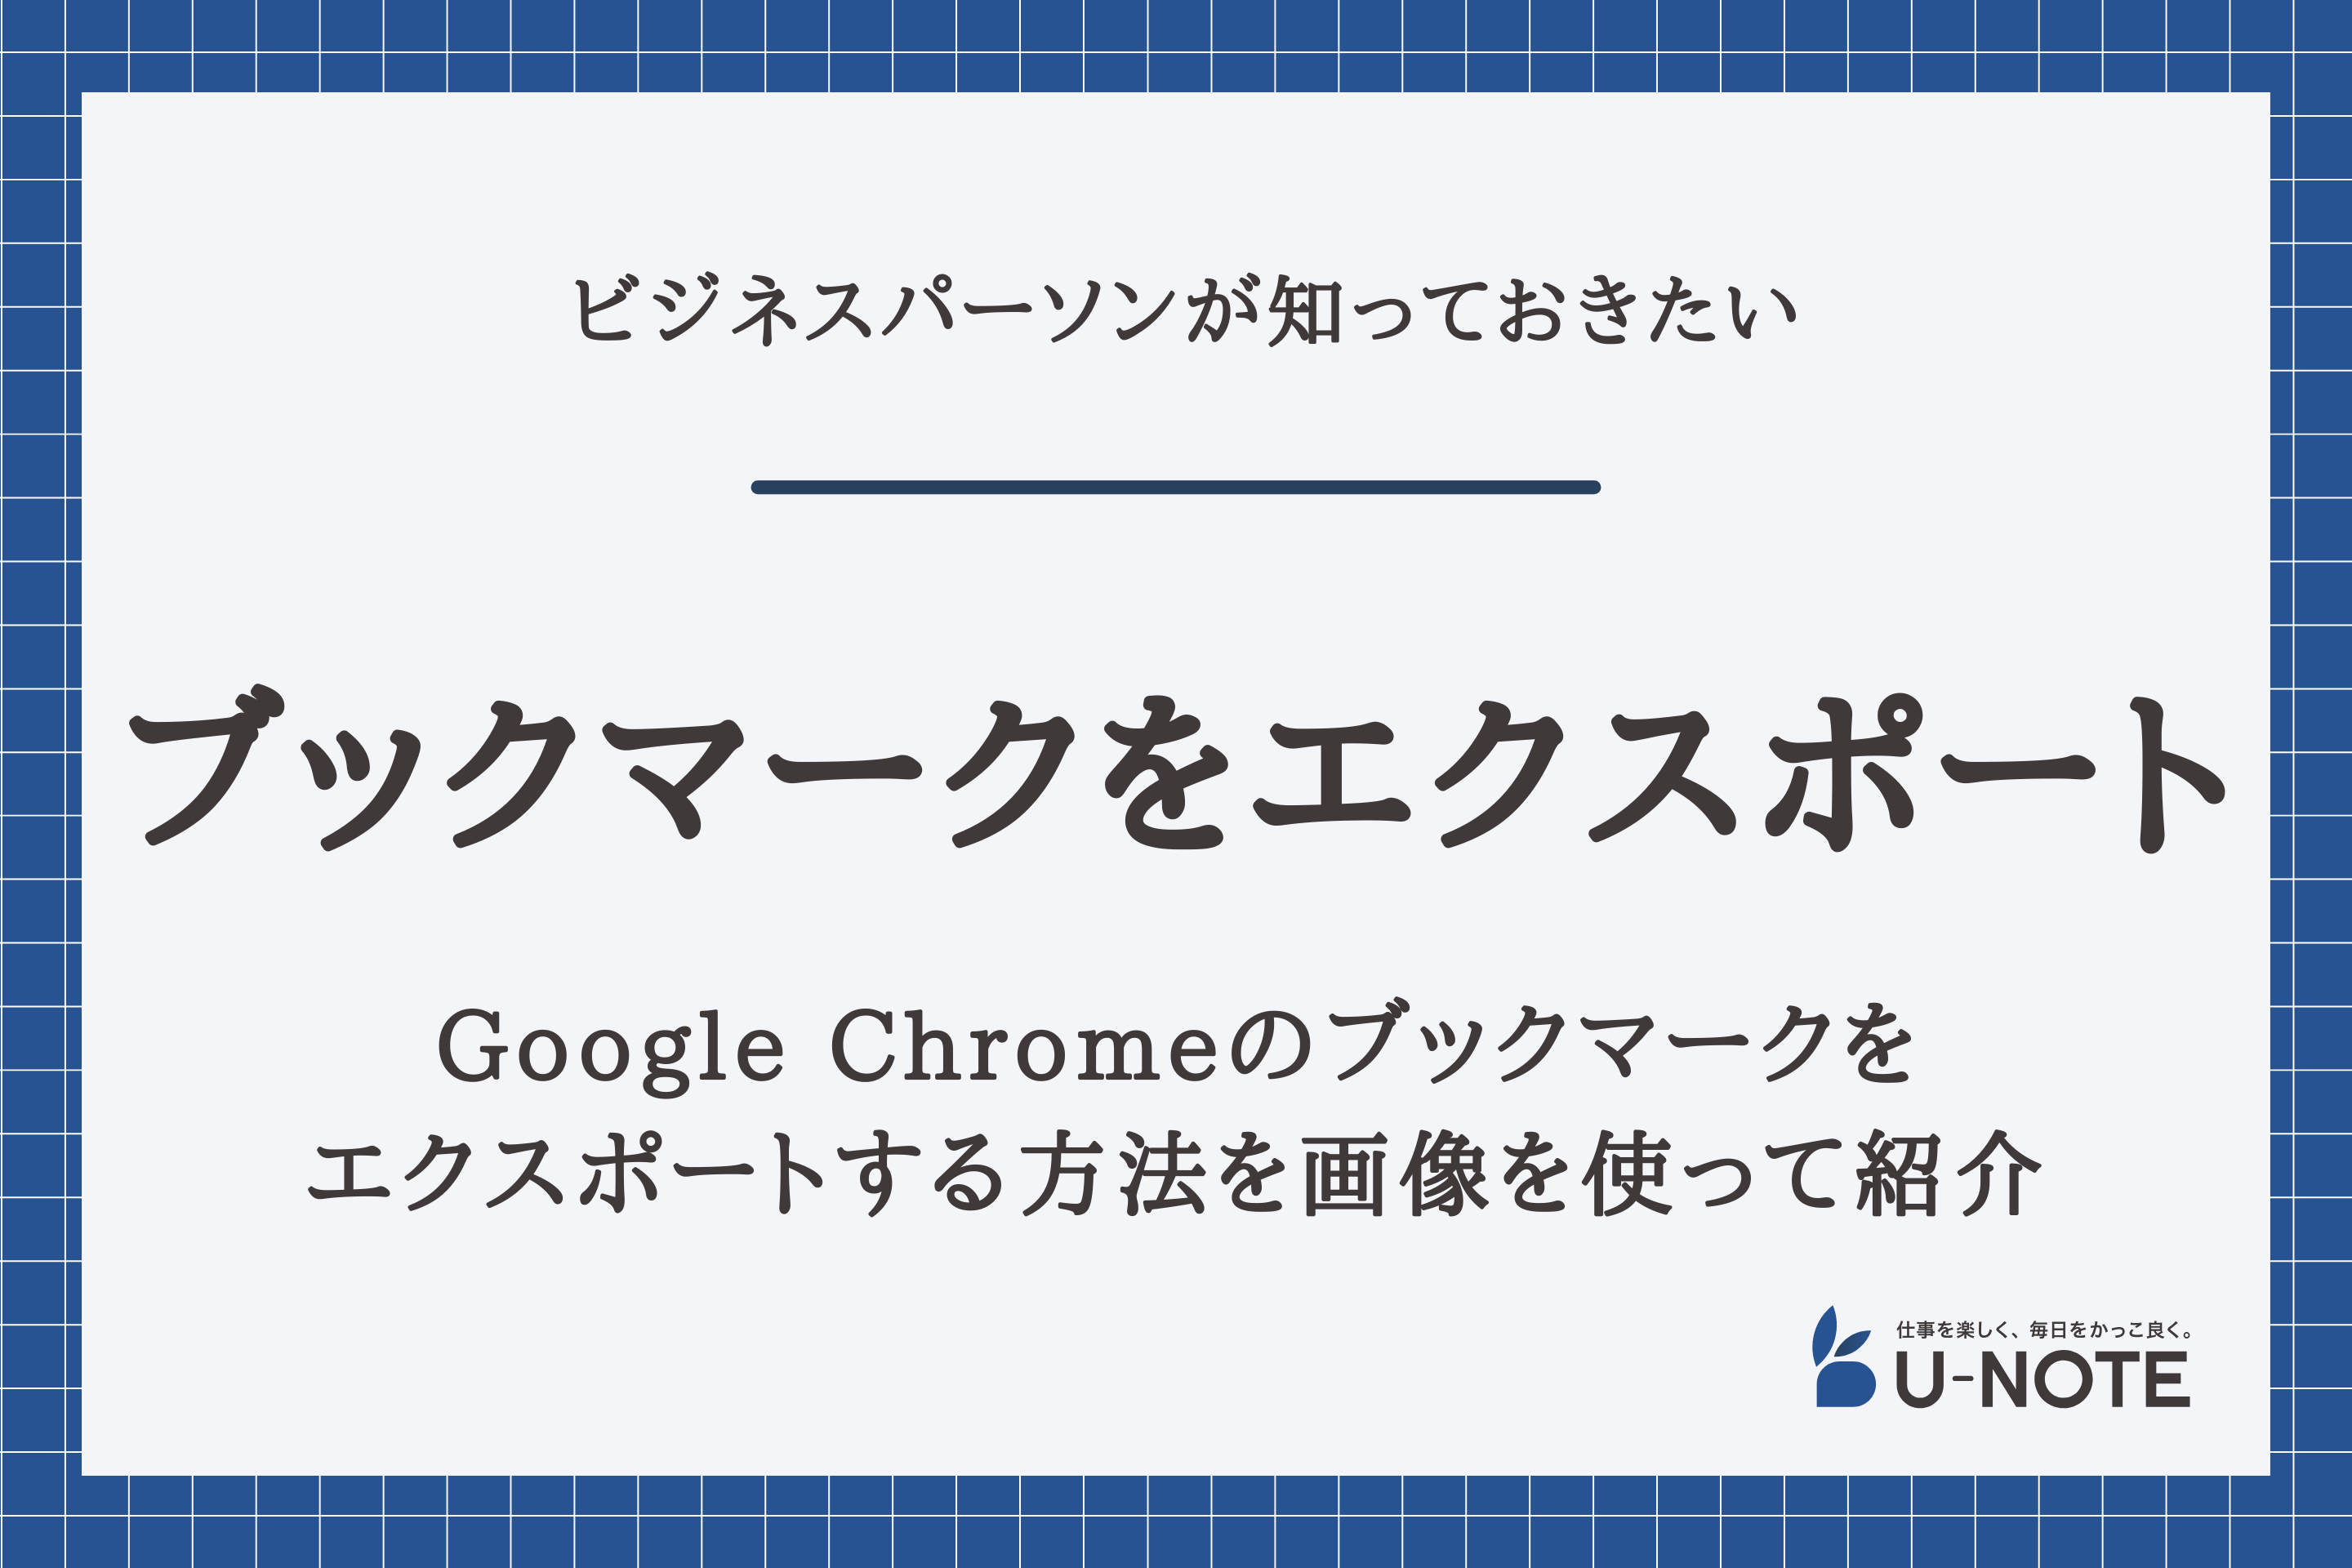 Google Chromeのブックマークをエクスポートする方法を画像を使って紹介